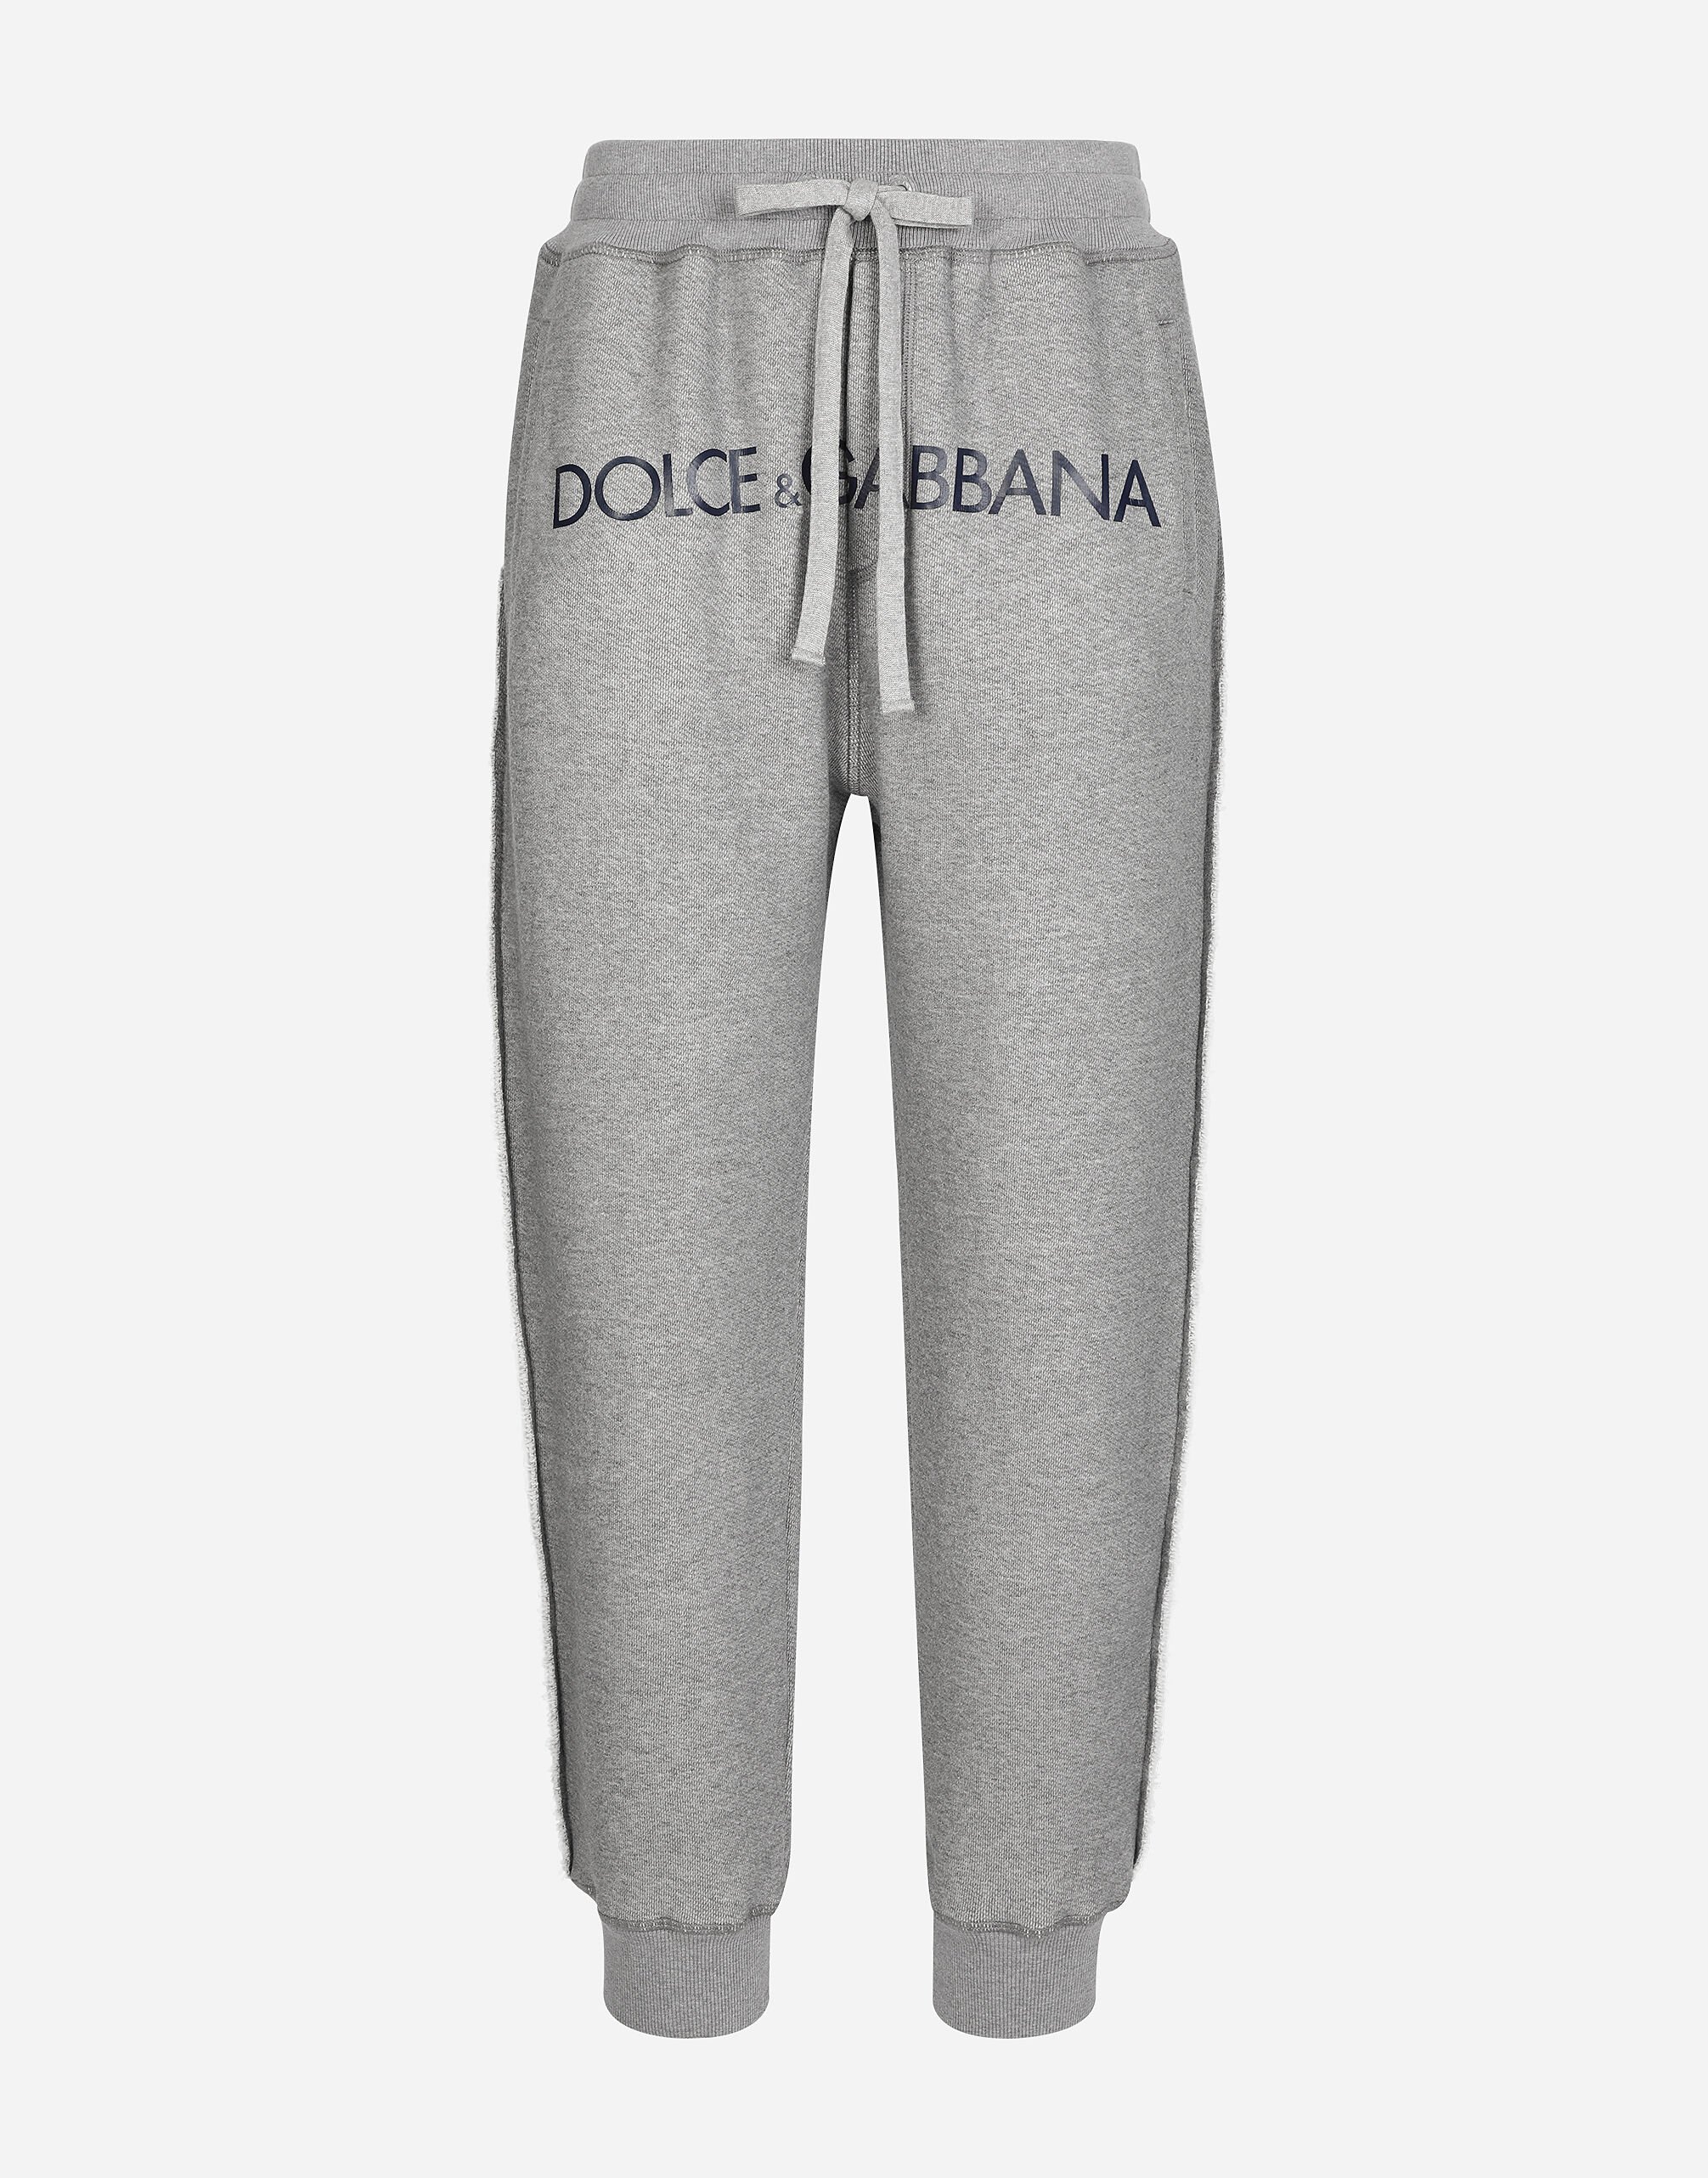 Dolce & Gabbana Jogging pants with Dolce&Gabbana logo Grey G2NW1TFU4LB